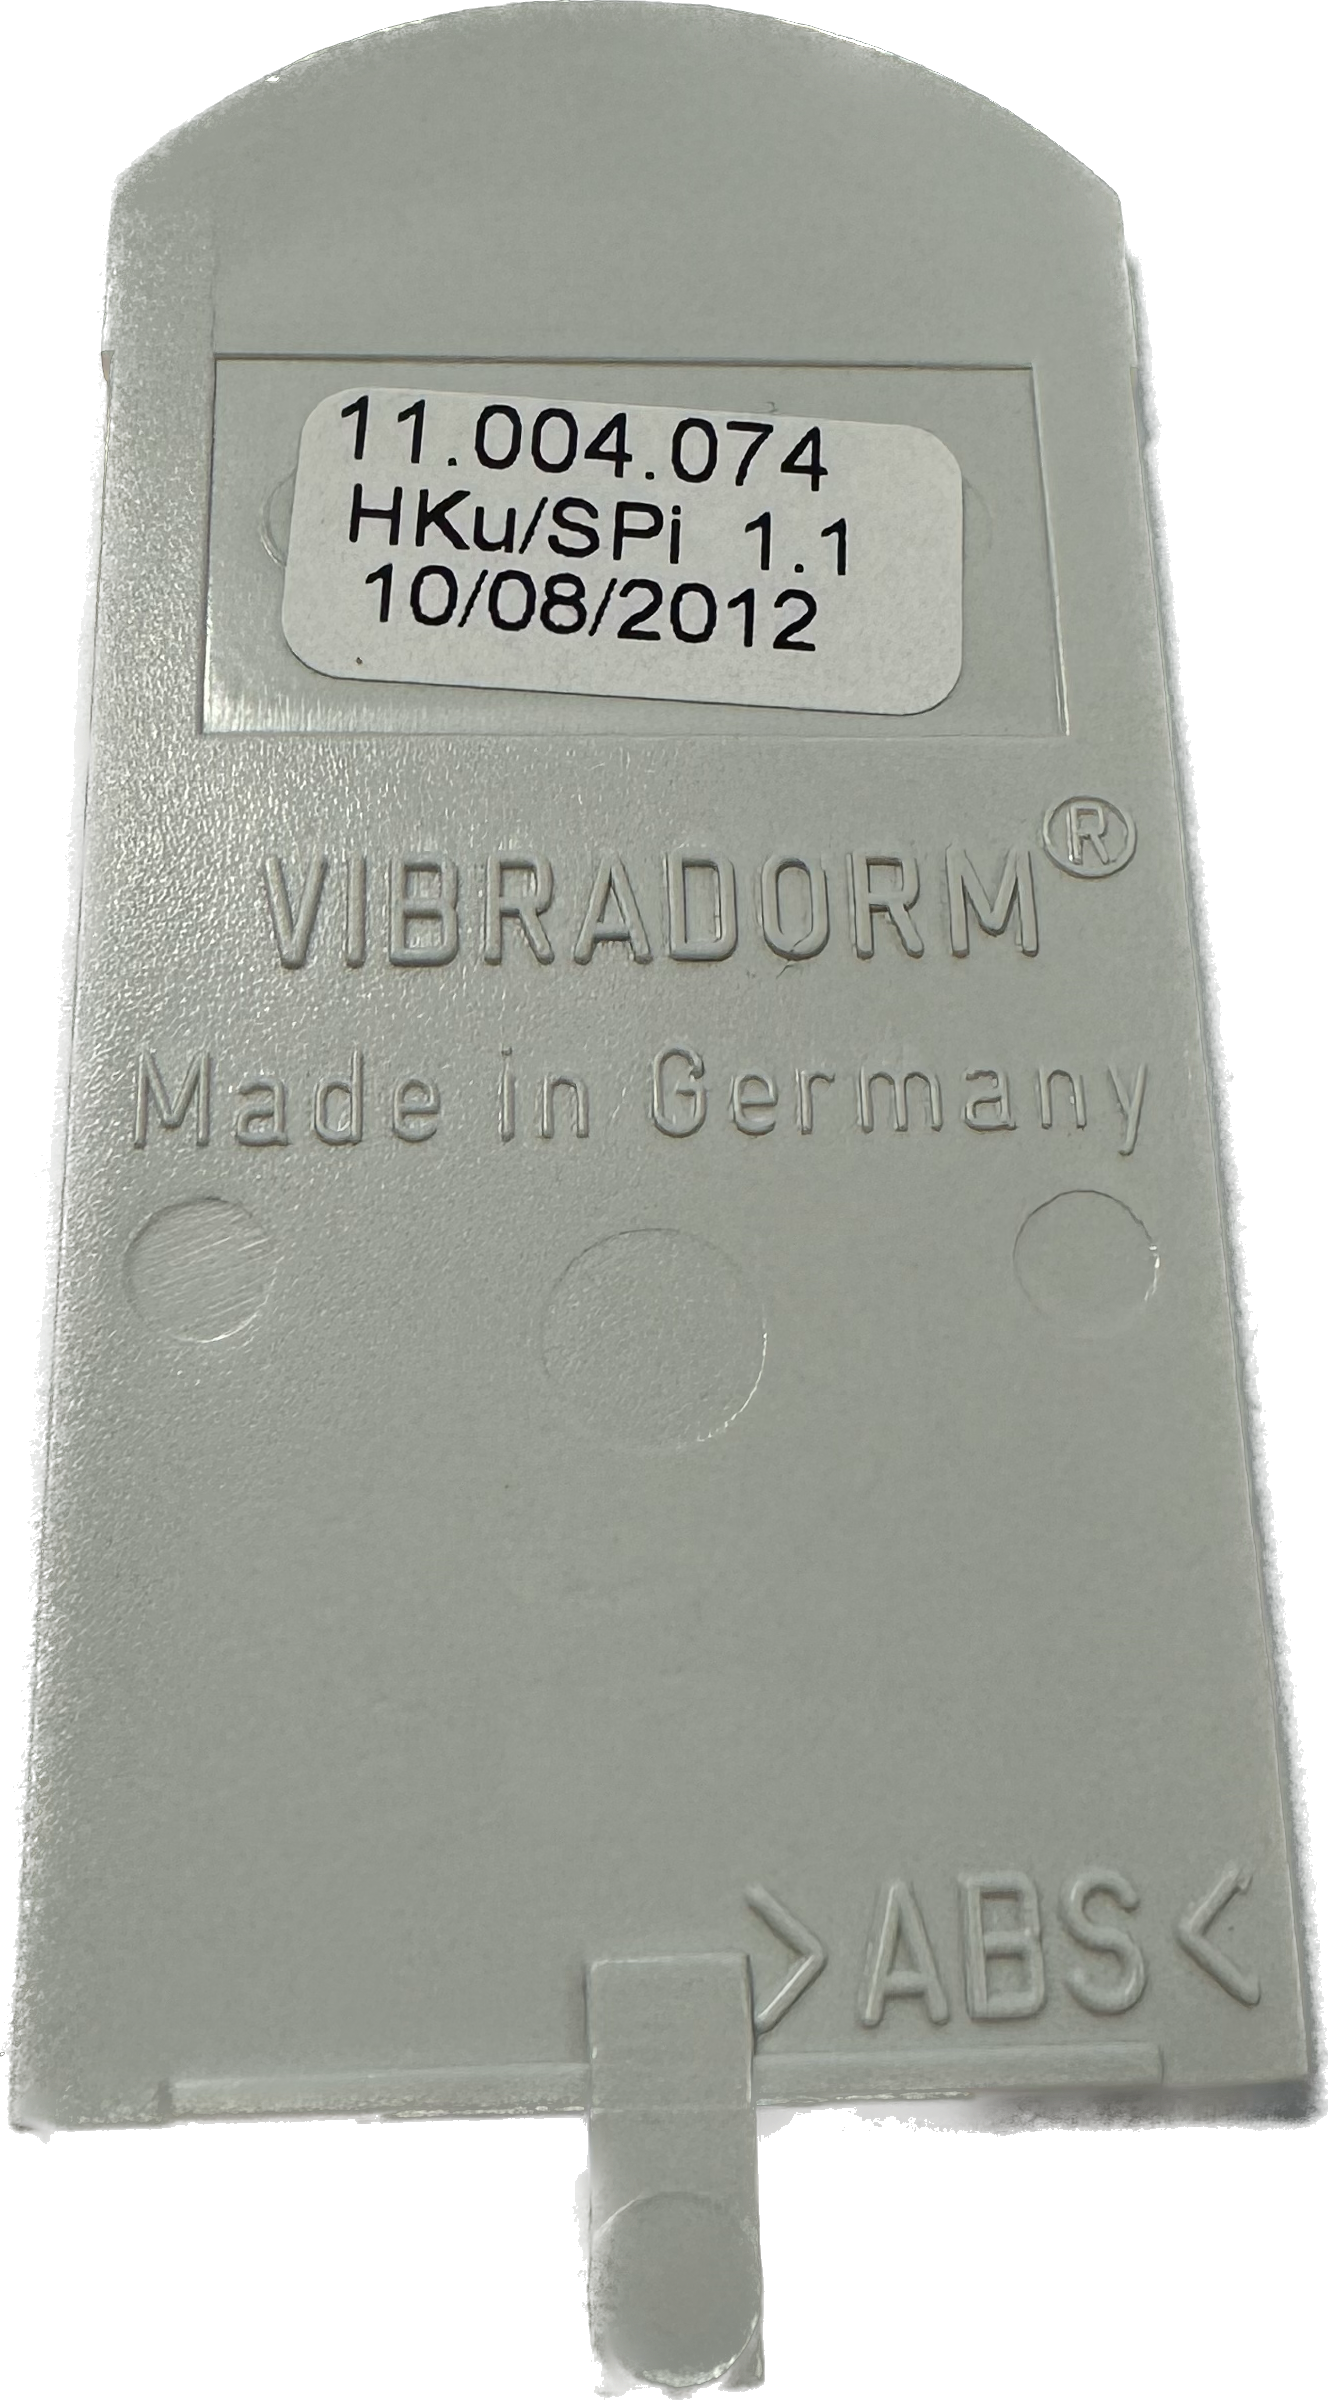 Vibradorm Electric Handset Remote Controller 11.004.074